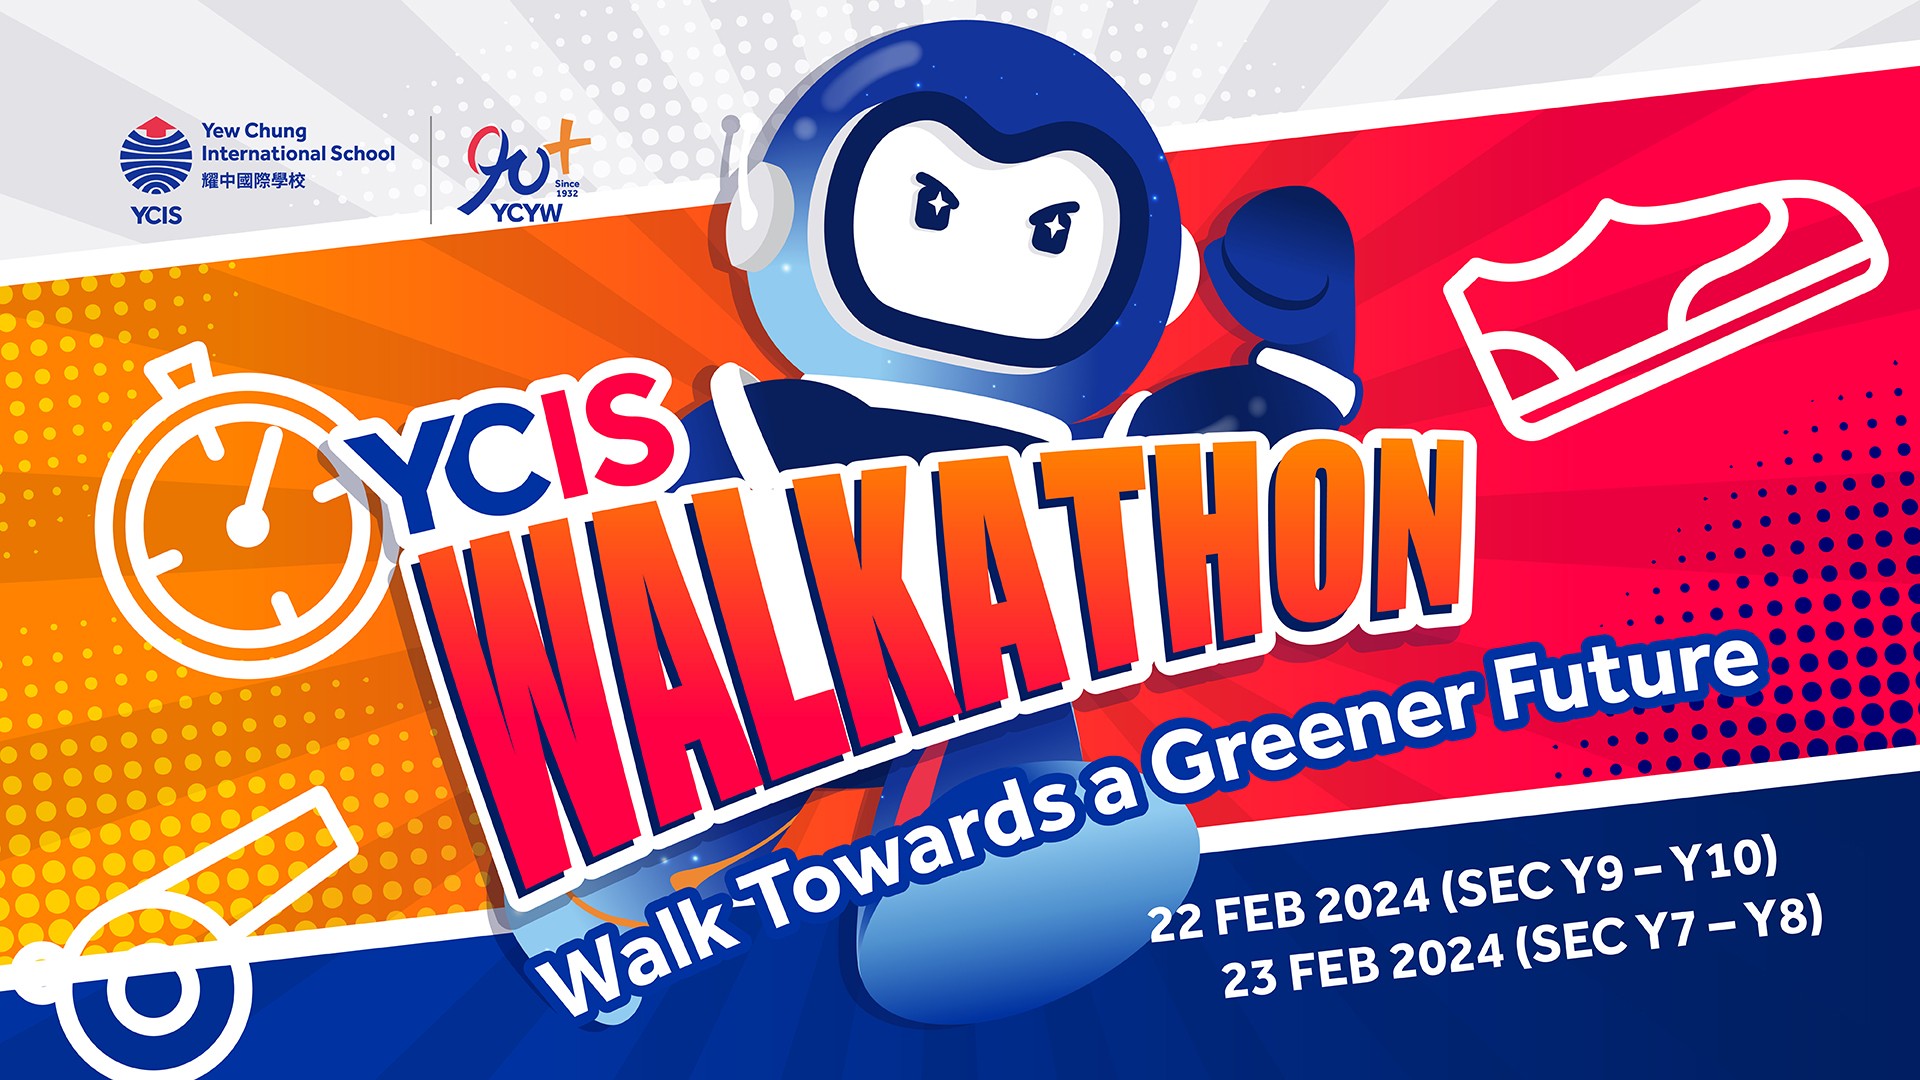 YCIS Walkathon | 22 February 2024 (Thursday) and 23 February 2024 (Friday)